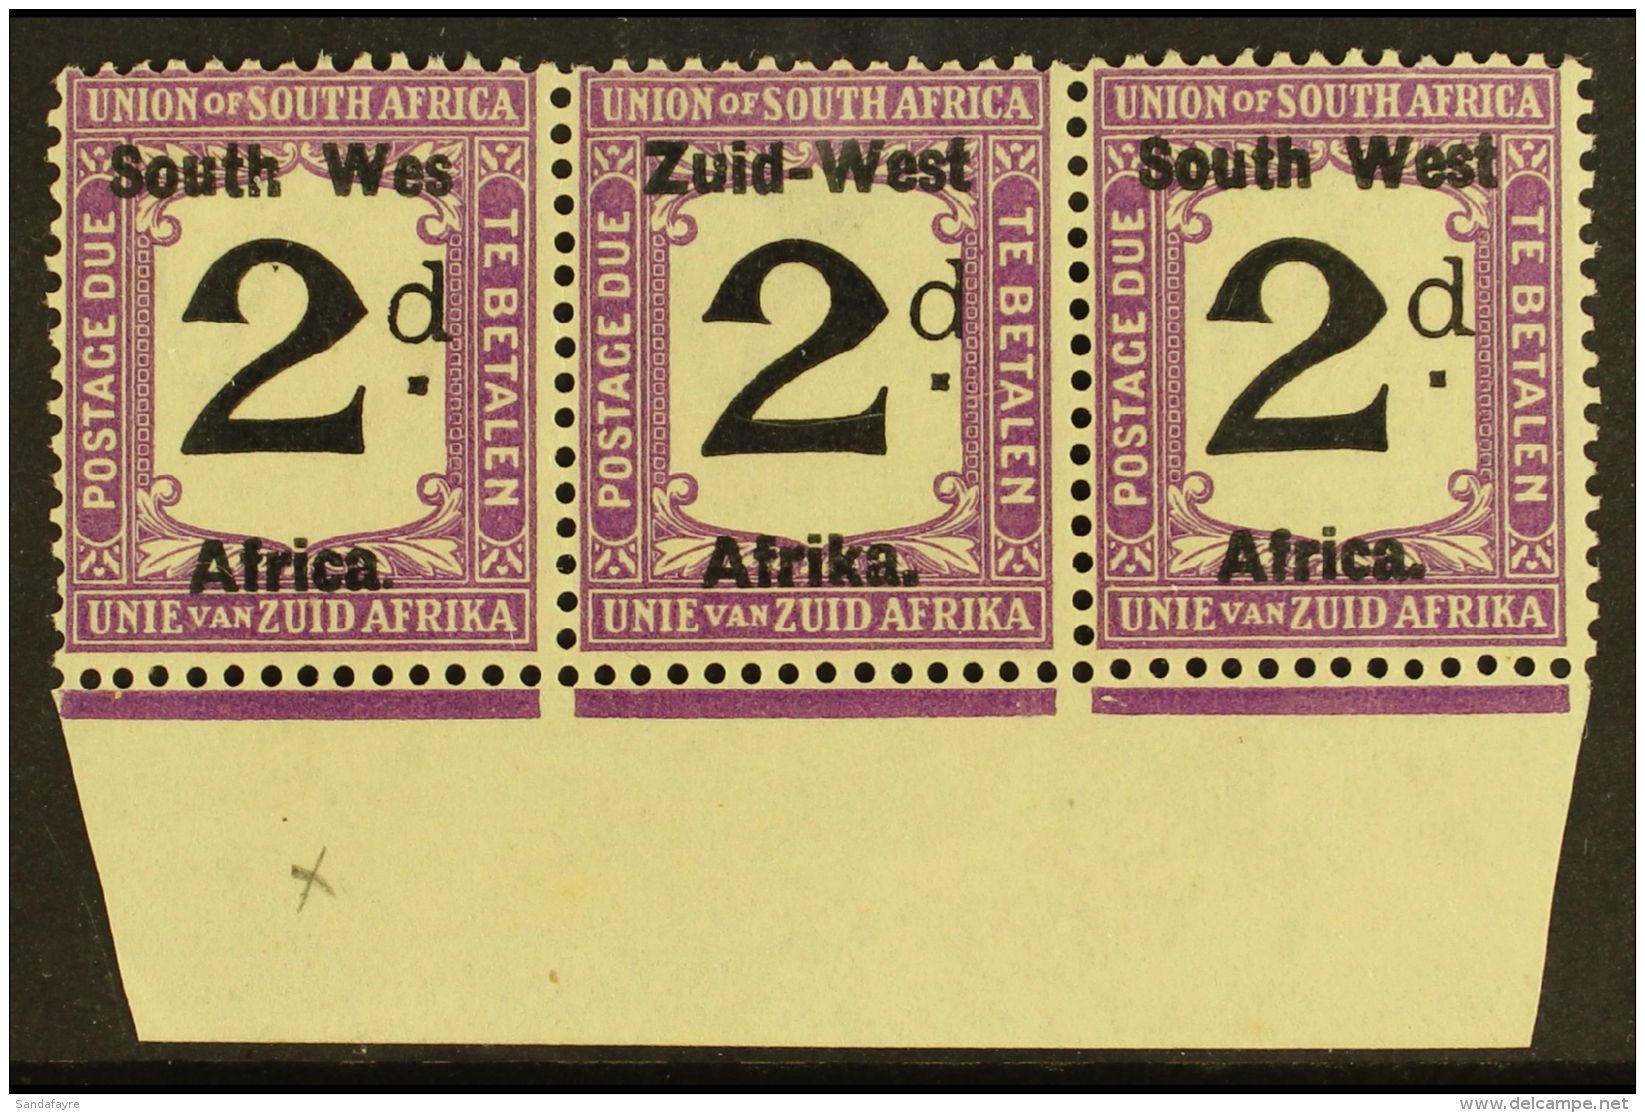 POSTAGE DUES 1923 2d Black And Violet, Marginal Strip Of 3, One Showing Variety "Wes For West", SG D3a, Very Fine... - Afrique Du Sud-Ouest (1923-1990)